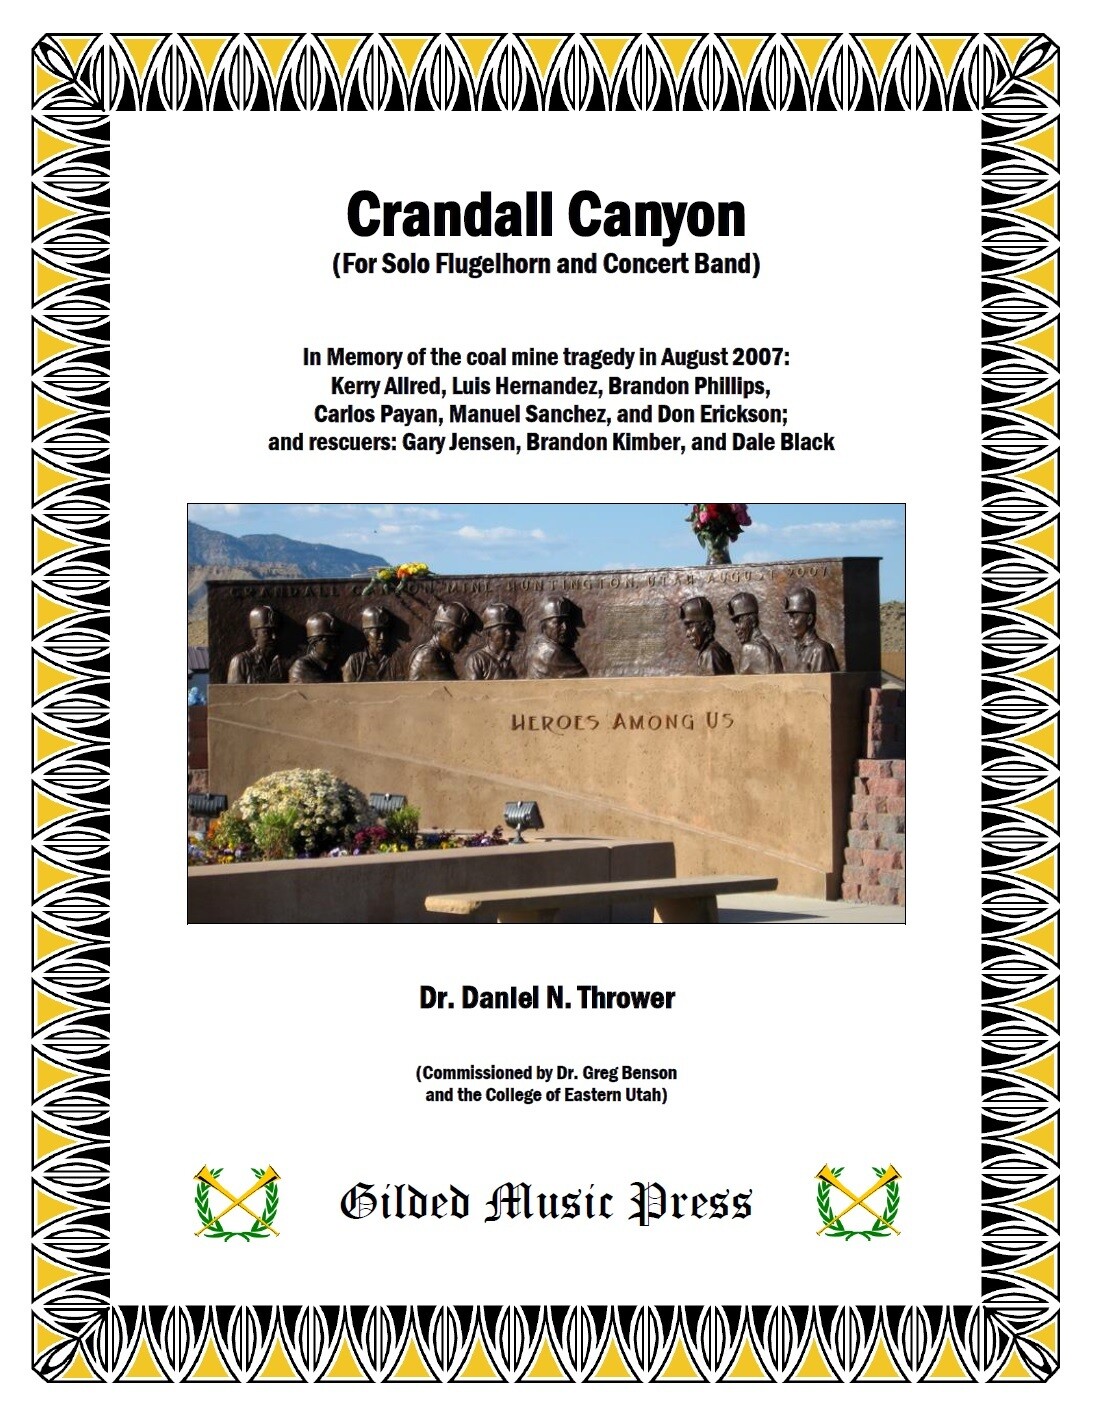 GMP 6002: Crandall Canyon (Solo Flugelhorn, Concert Band), Dr. Daniel Thrower